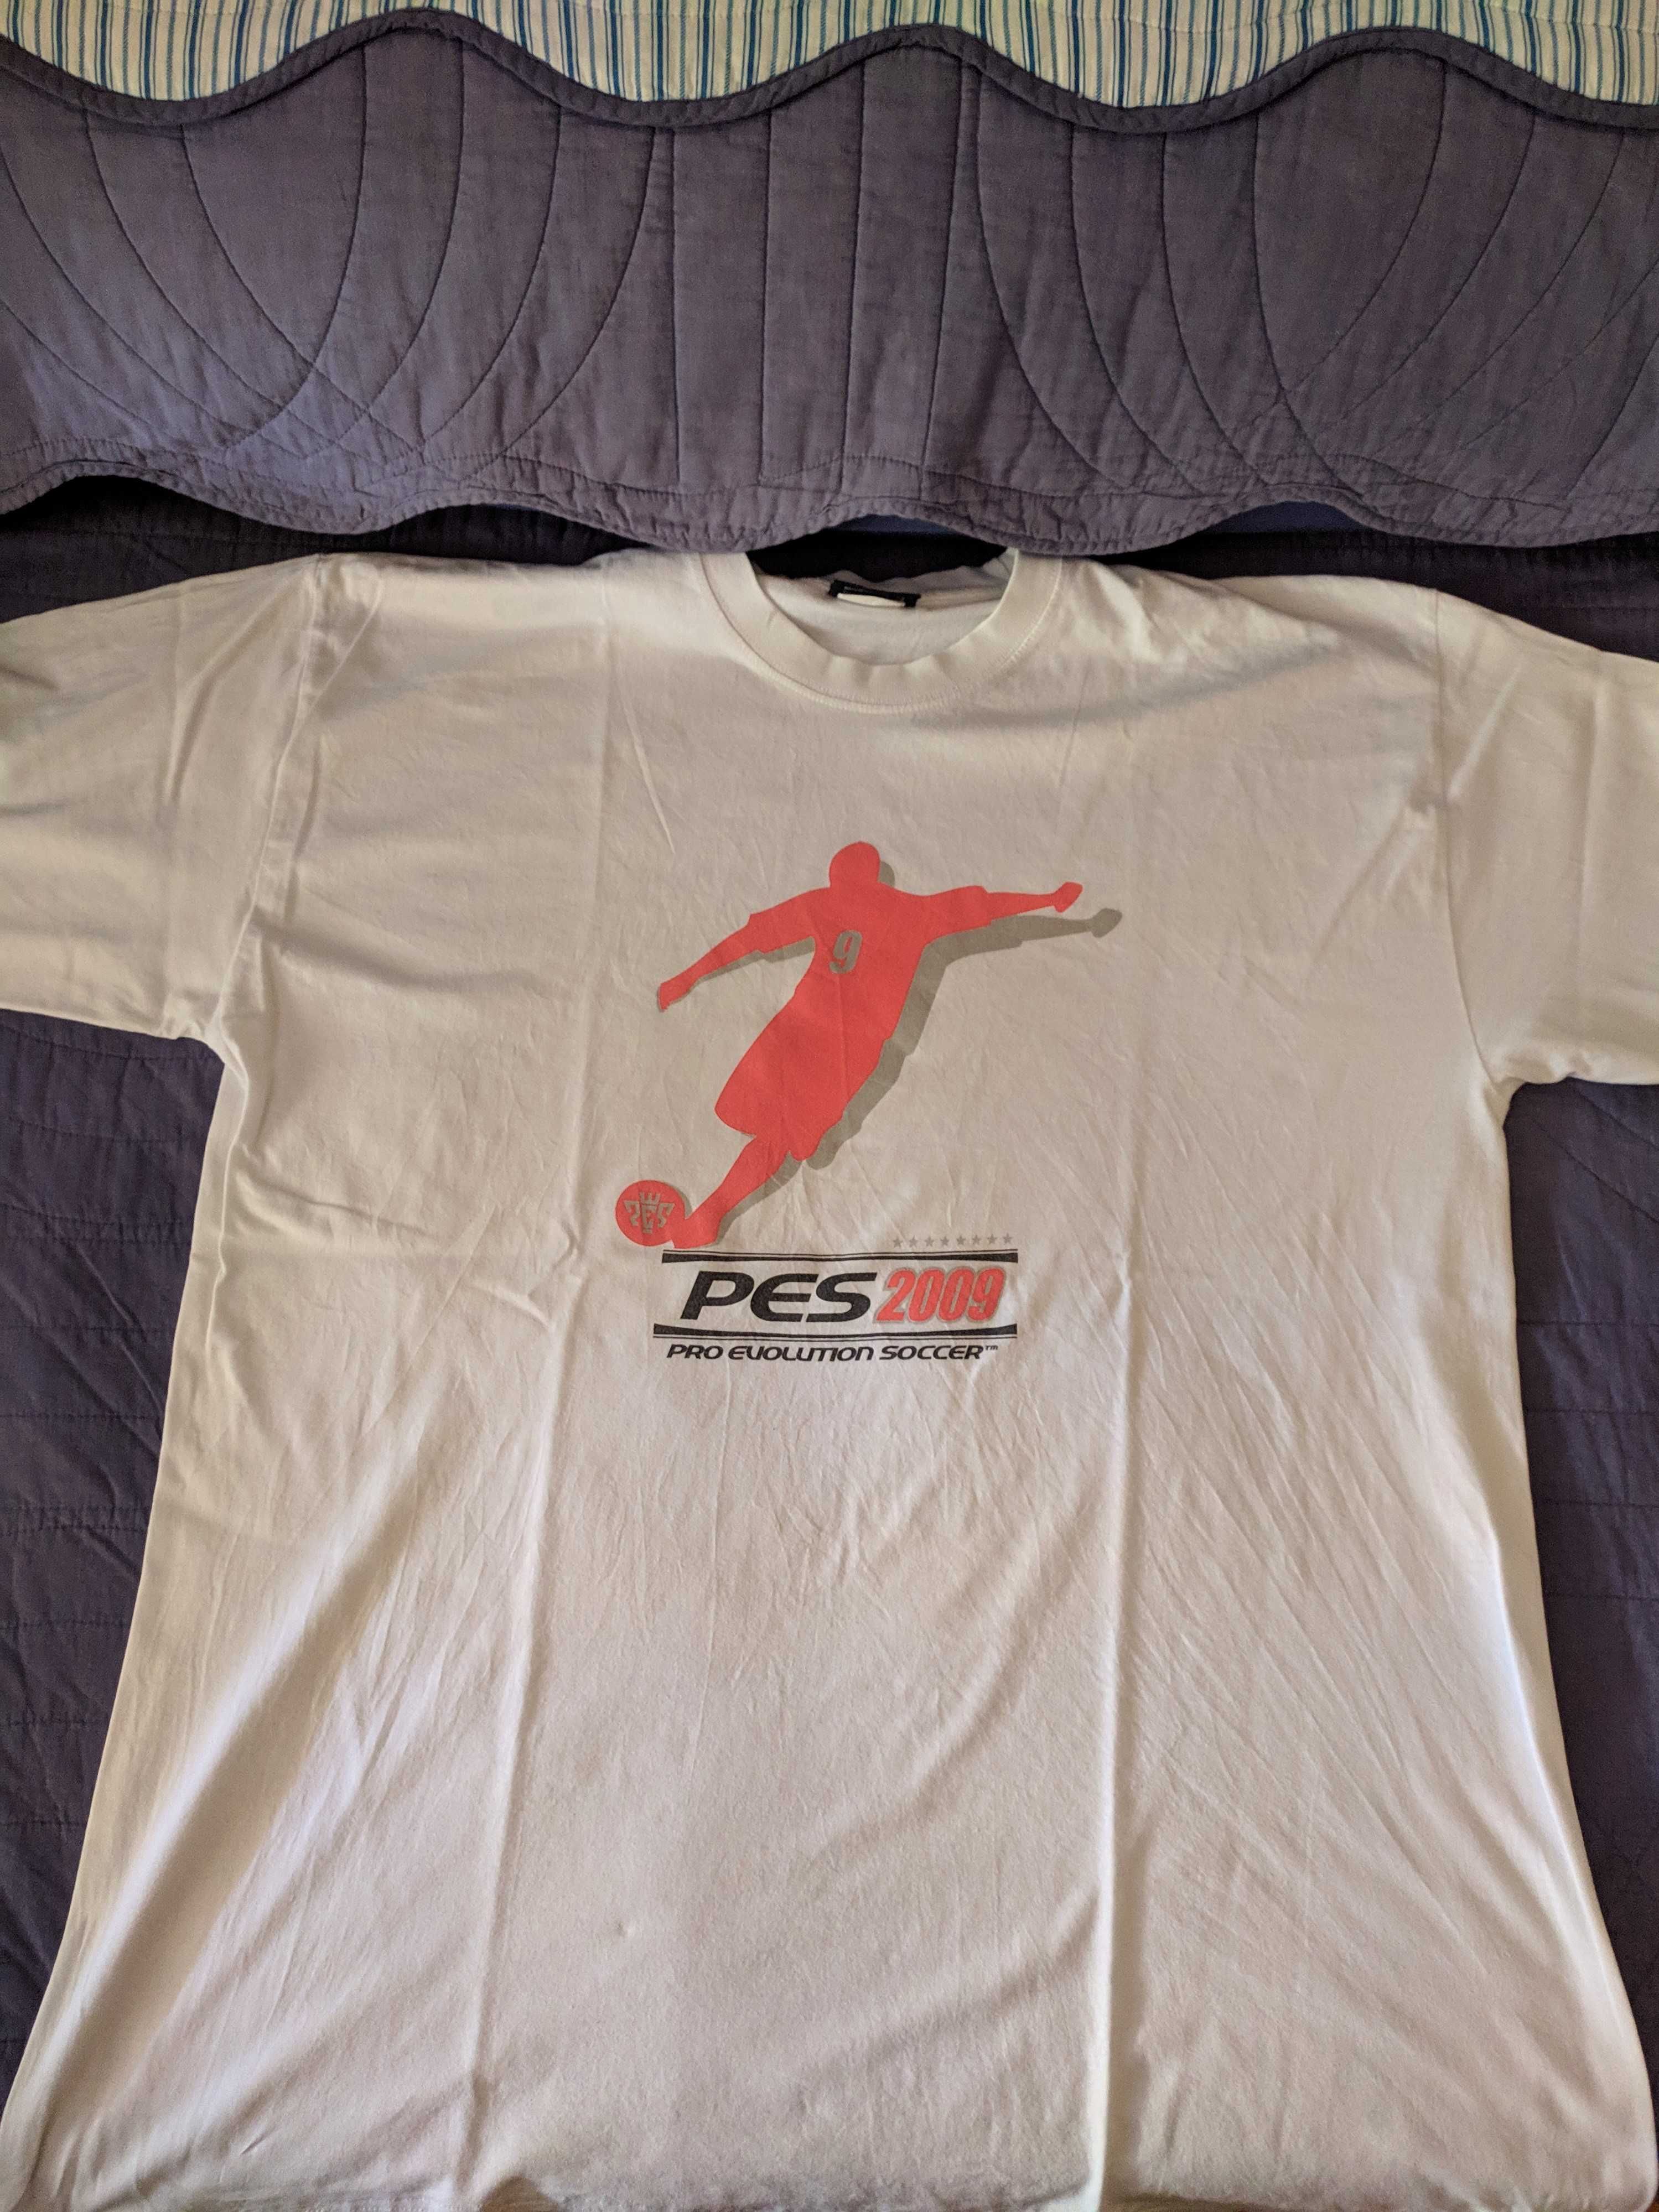 T-Shirt Promocional Pro Evolution Soccer (PES) 2009